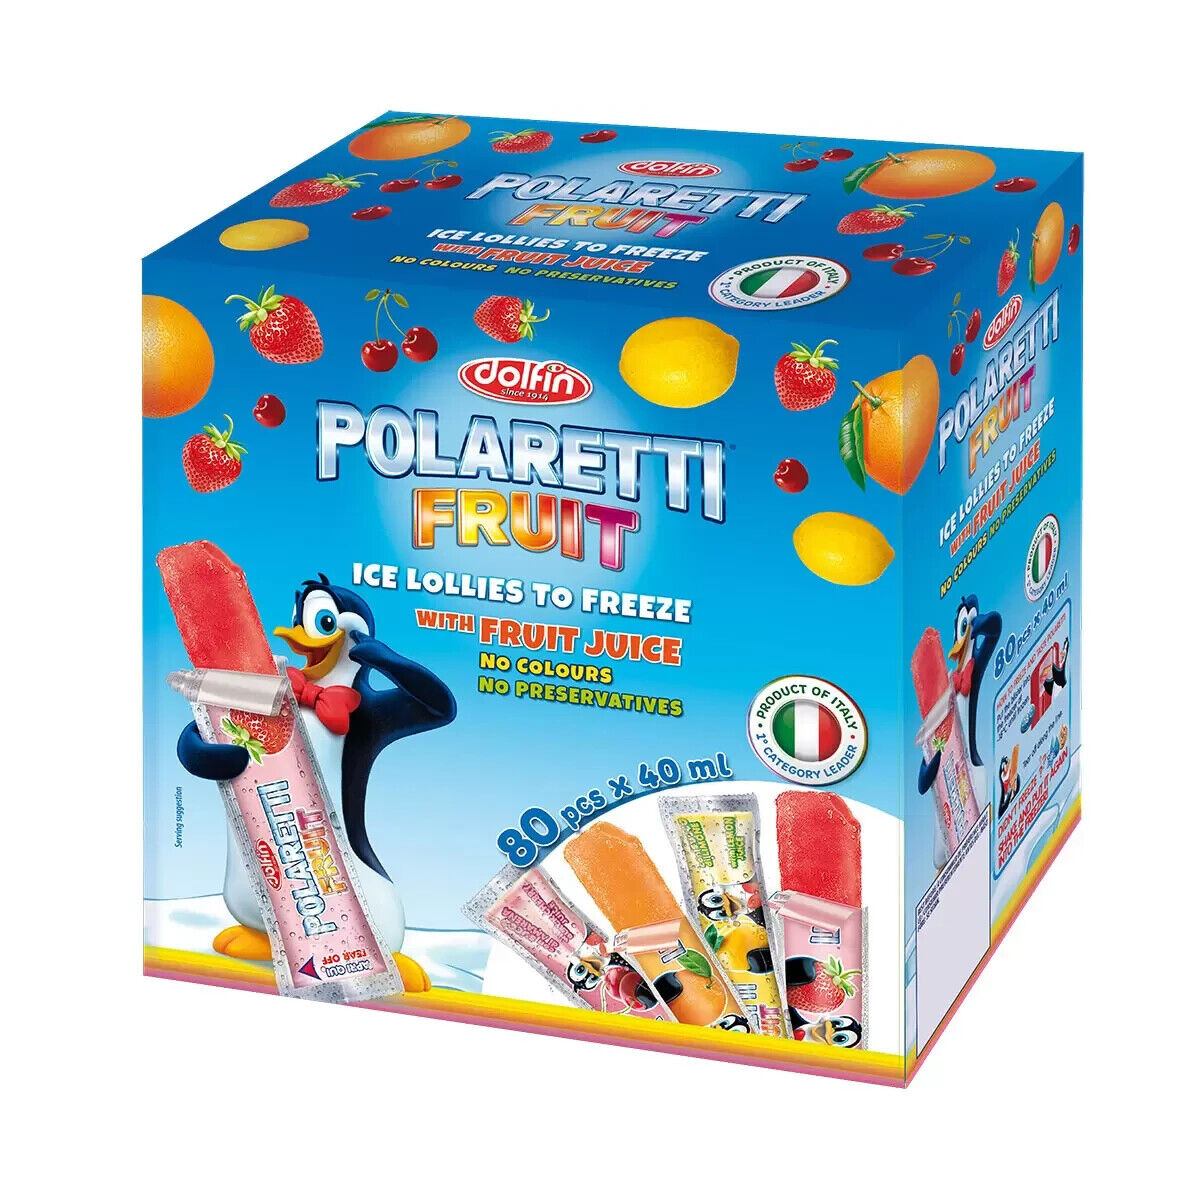 Dolfin Polaretti Real Fruit Juice Freezer Pops Ice Lollies Freeze - Pack of 80 x 40ml